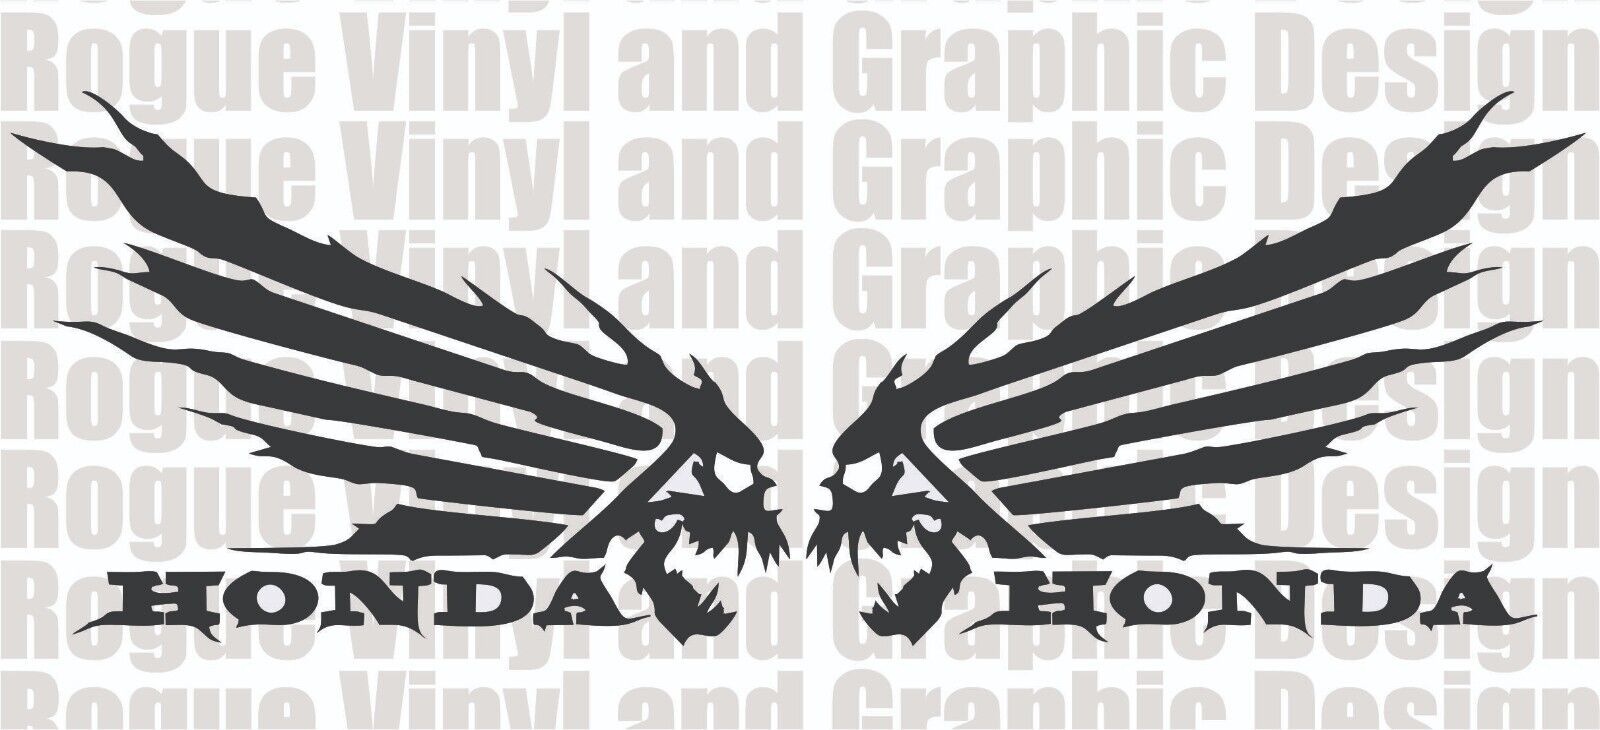 Honda Wings (skulls) Logo Decal / Sticker - Pair